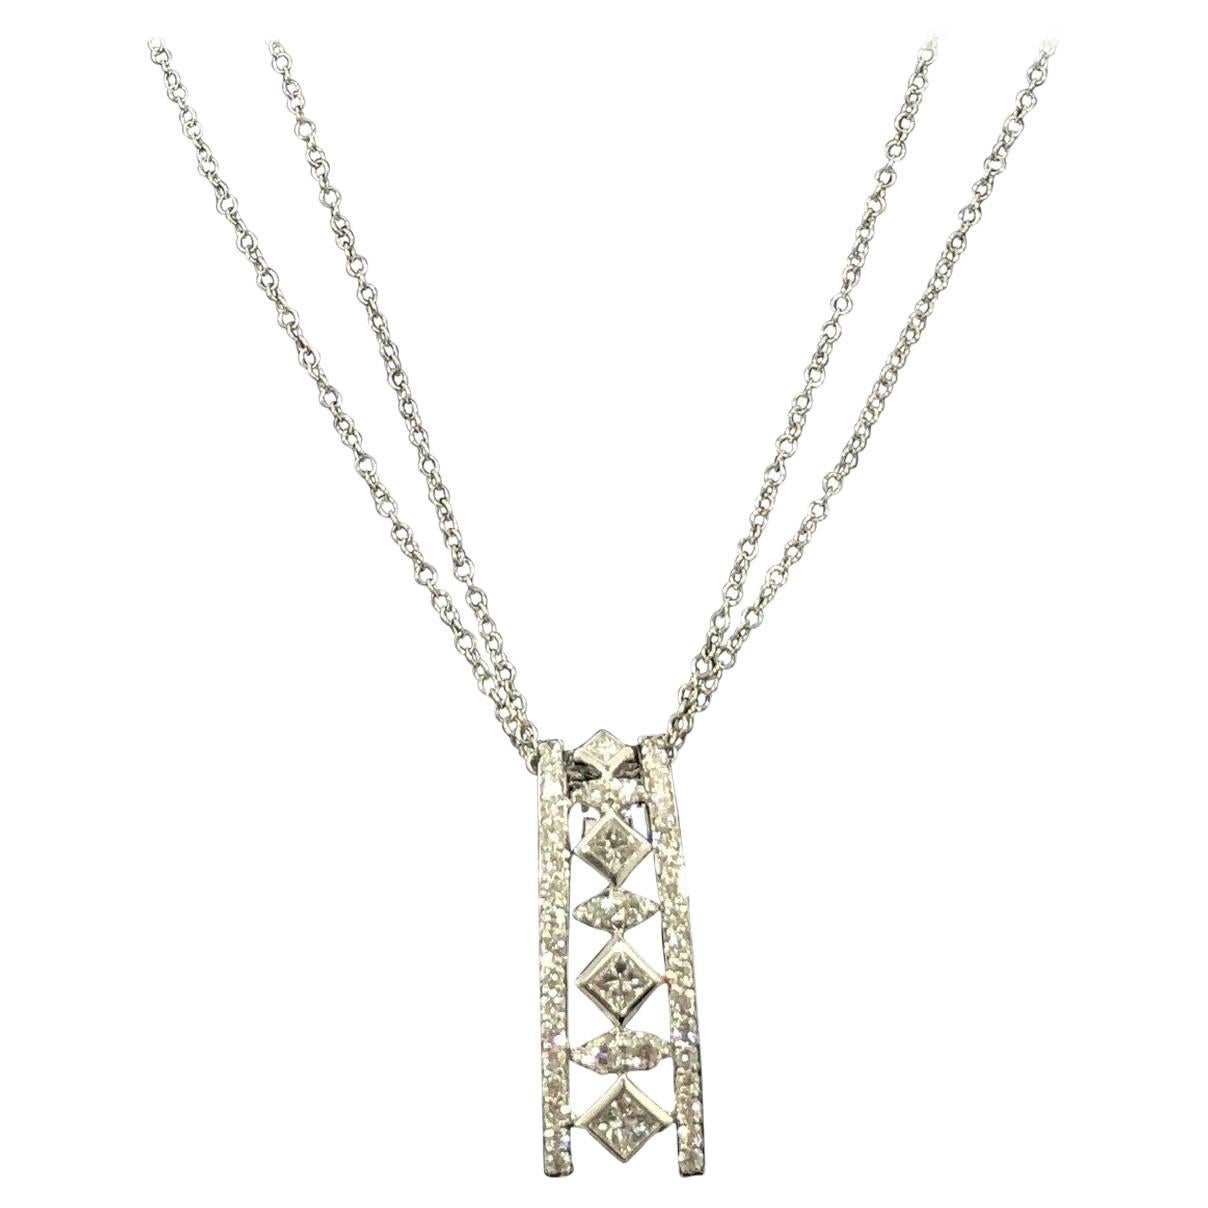 Peter Storm 18 Karat White Gold and Princess and Round Diamond Pendant Necklace